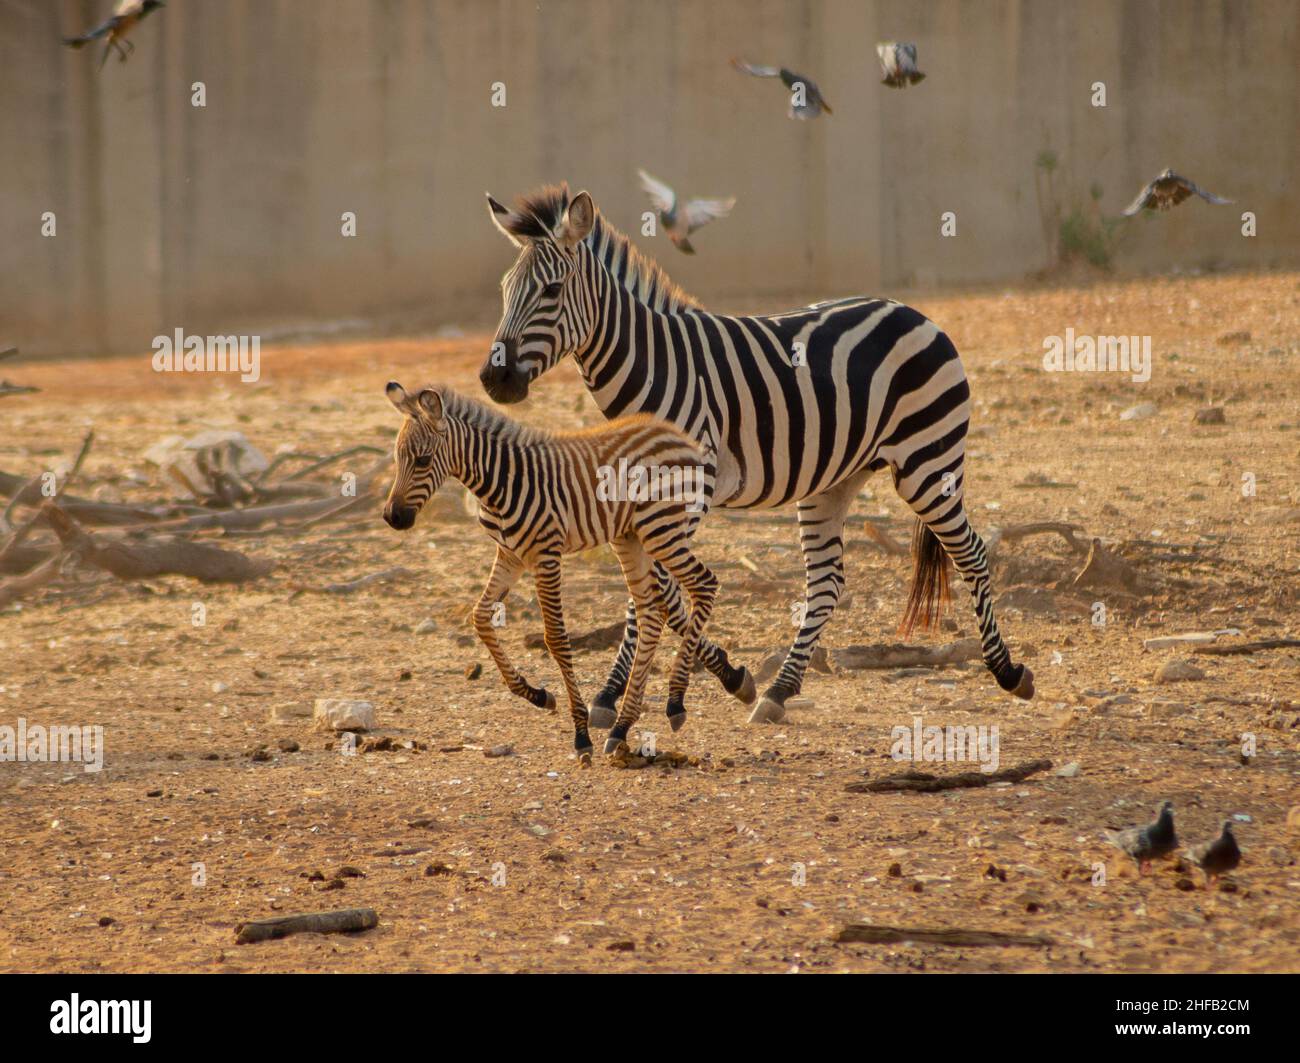 A zebra and her calf running in the Ramat gan safari Stock Photo